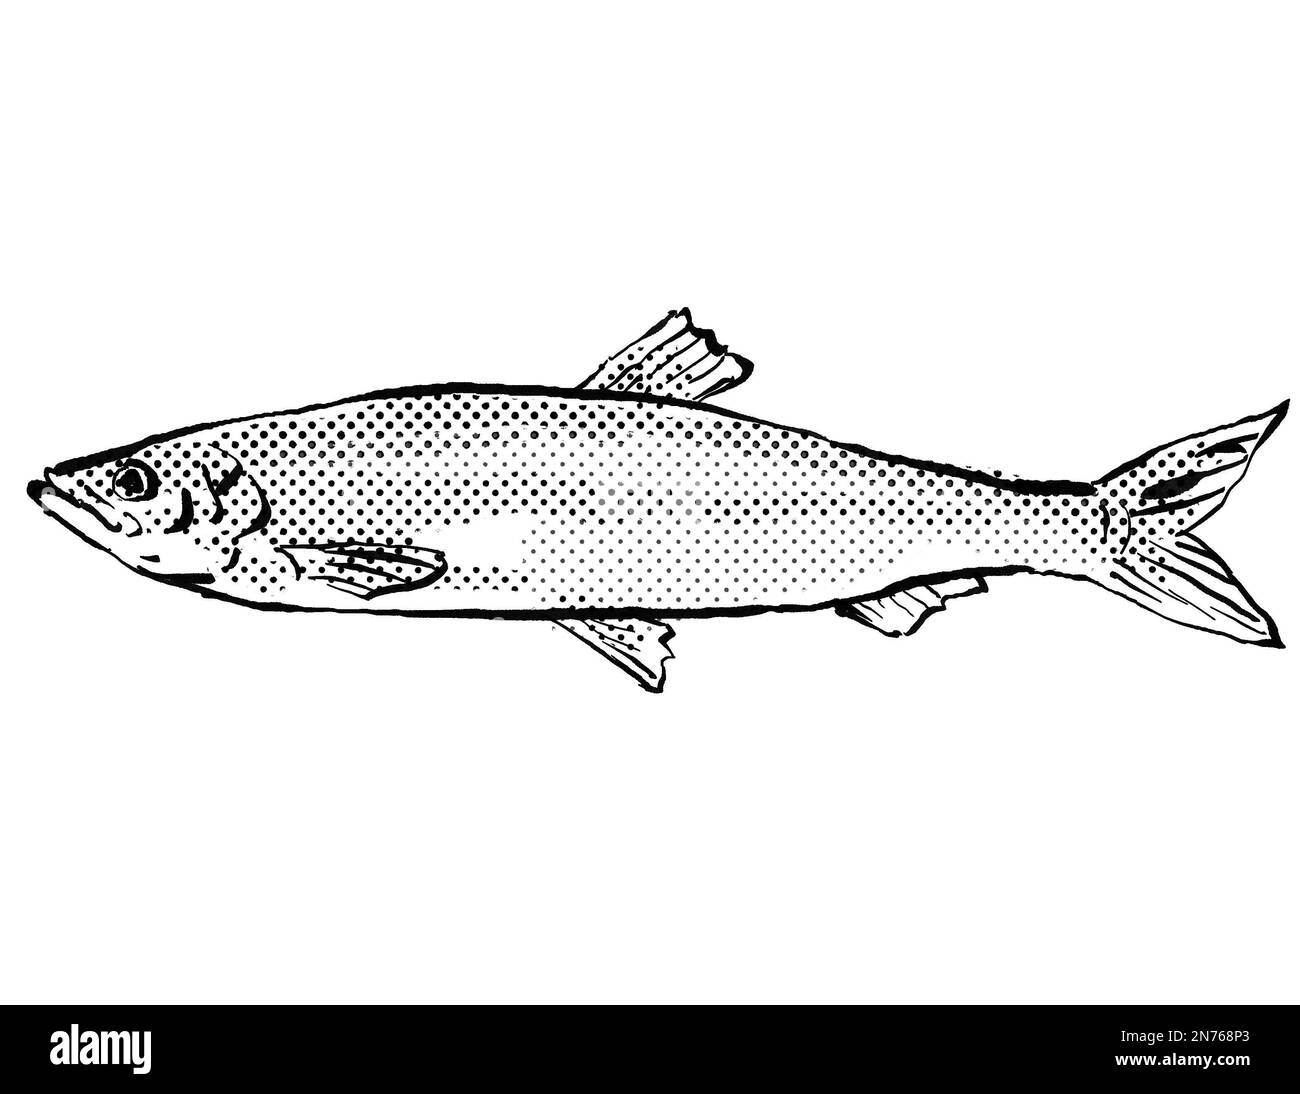 Herring fish Black and White Stock Photos & Images - Alamy